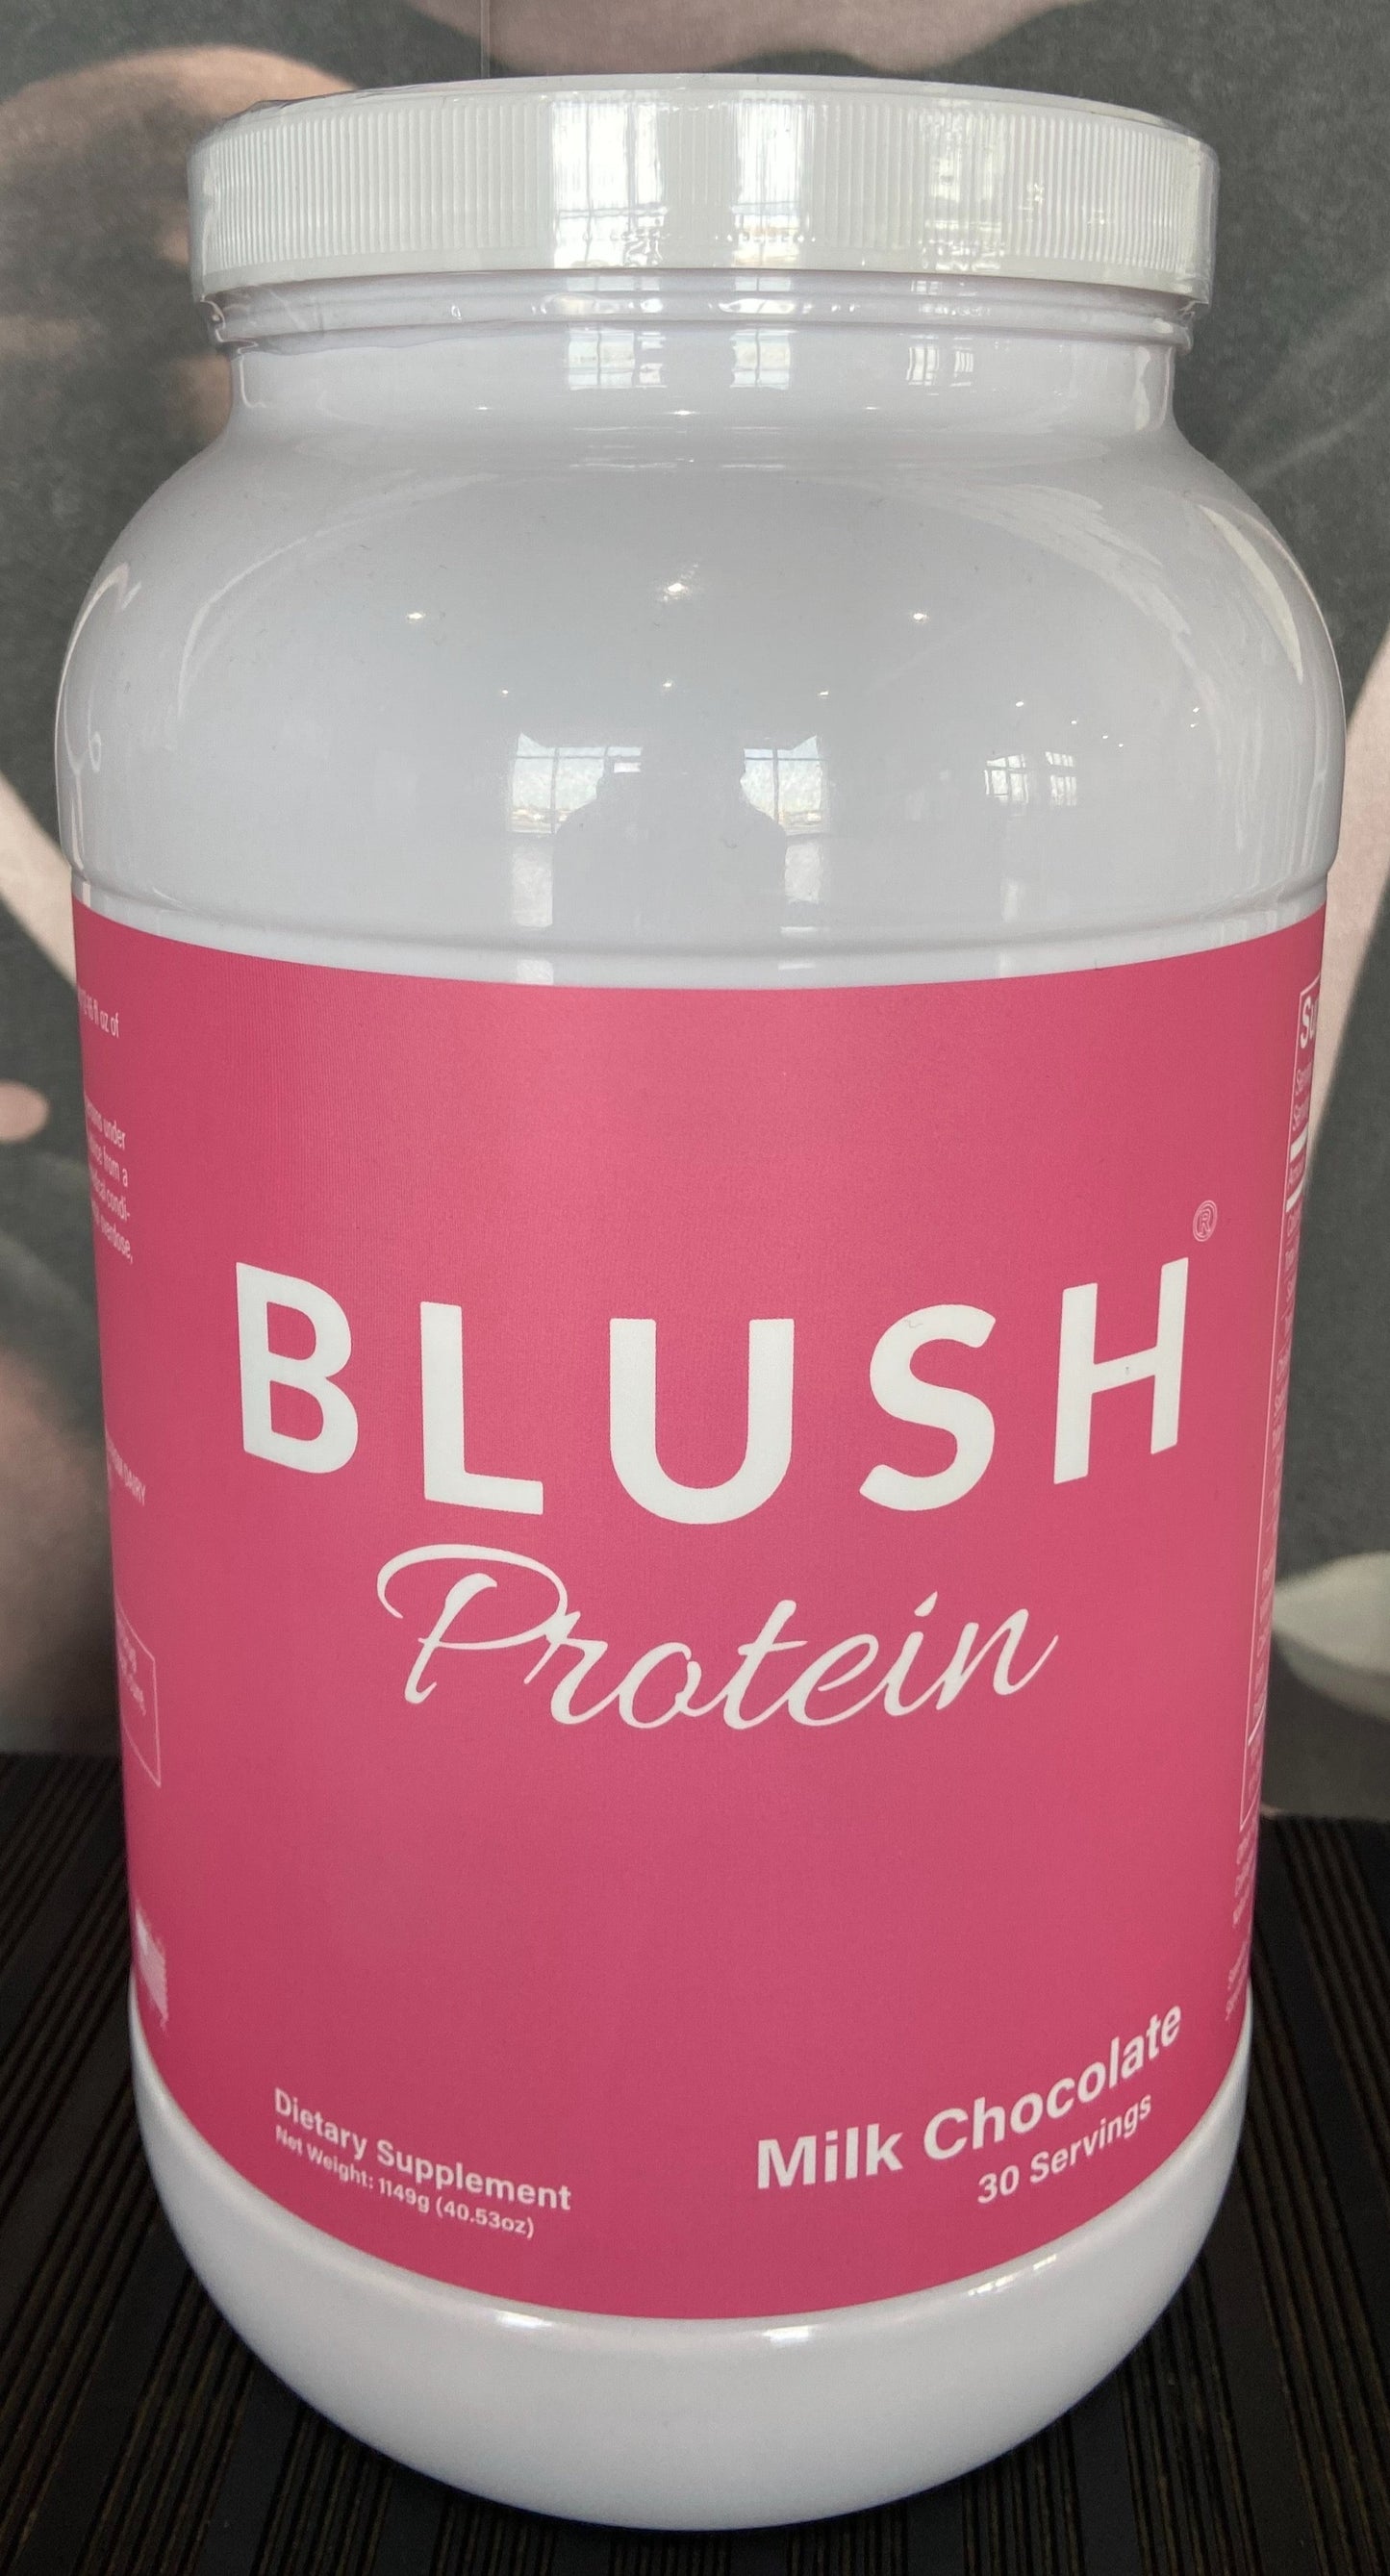 BLUSH Protein (Whey) - Milk Chocolate